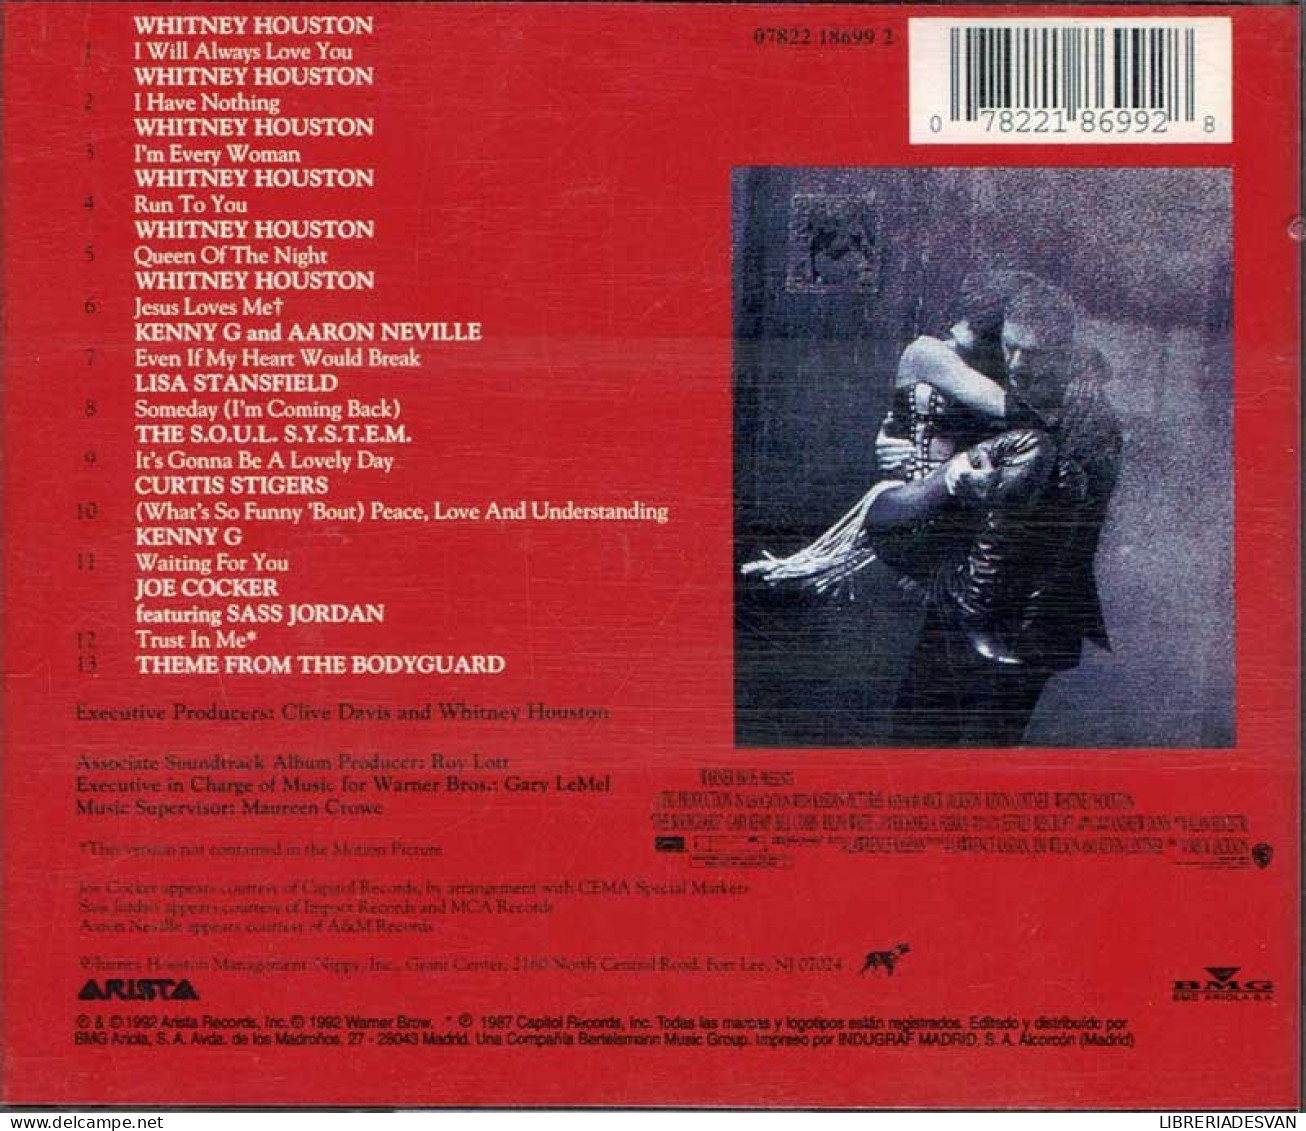 The Bodyguard (Original Soundtrack Album). CD - Filmmuziek